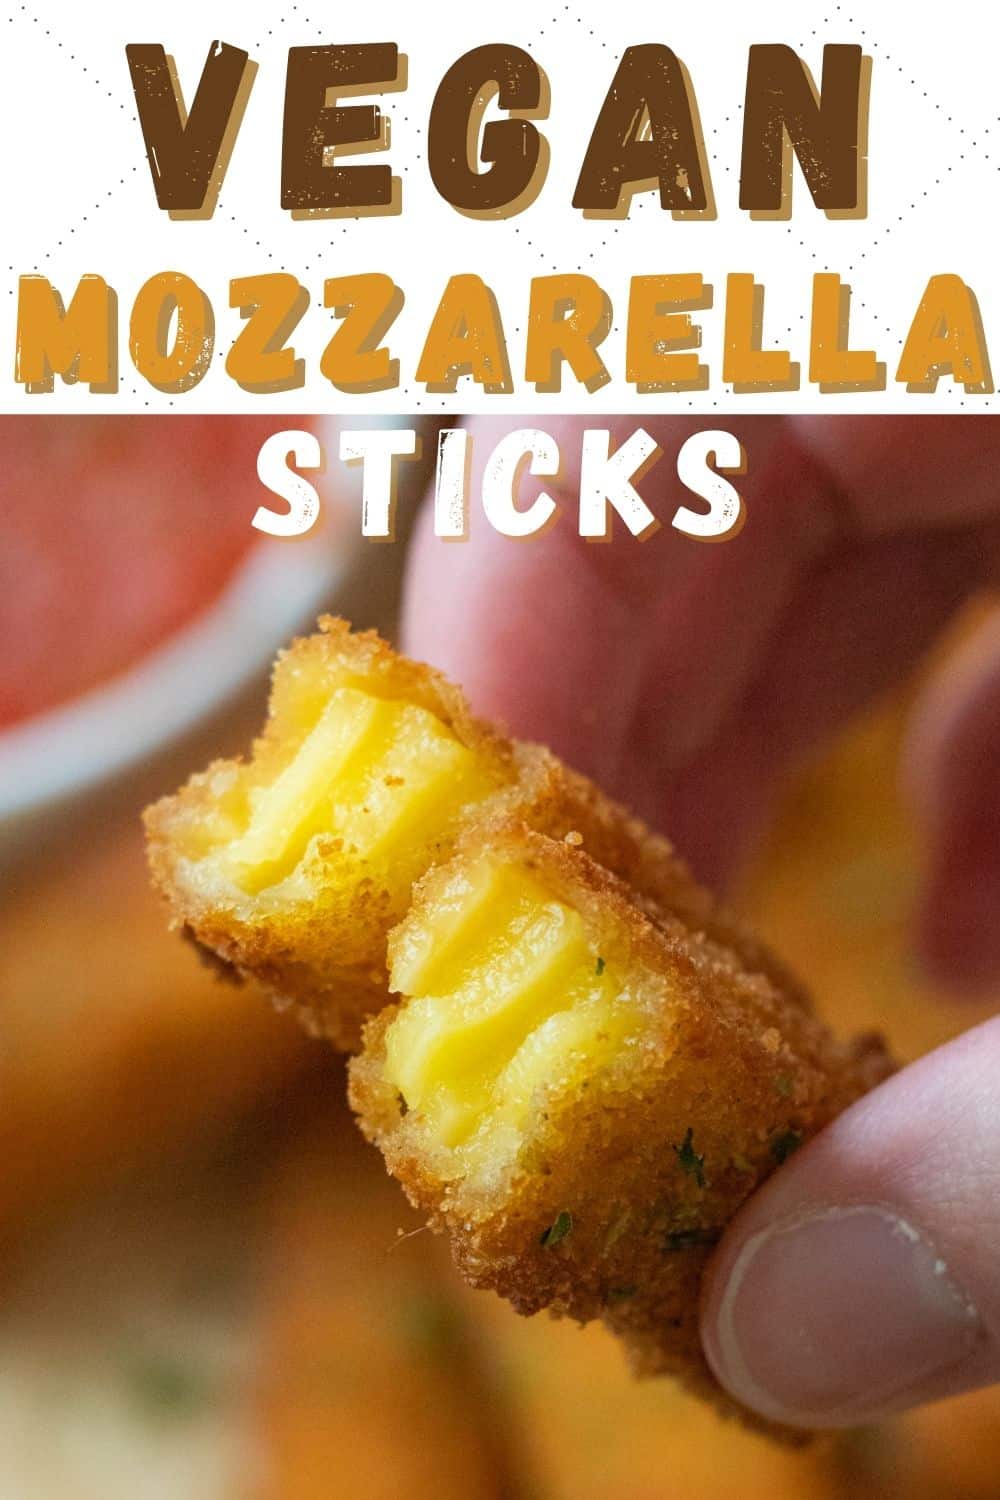 Mozzarella sticks pin.